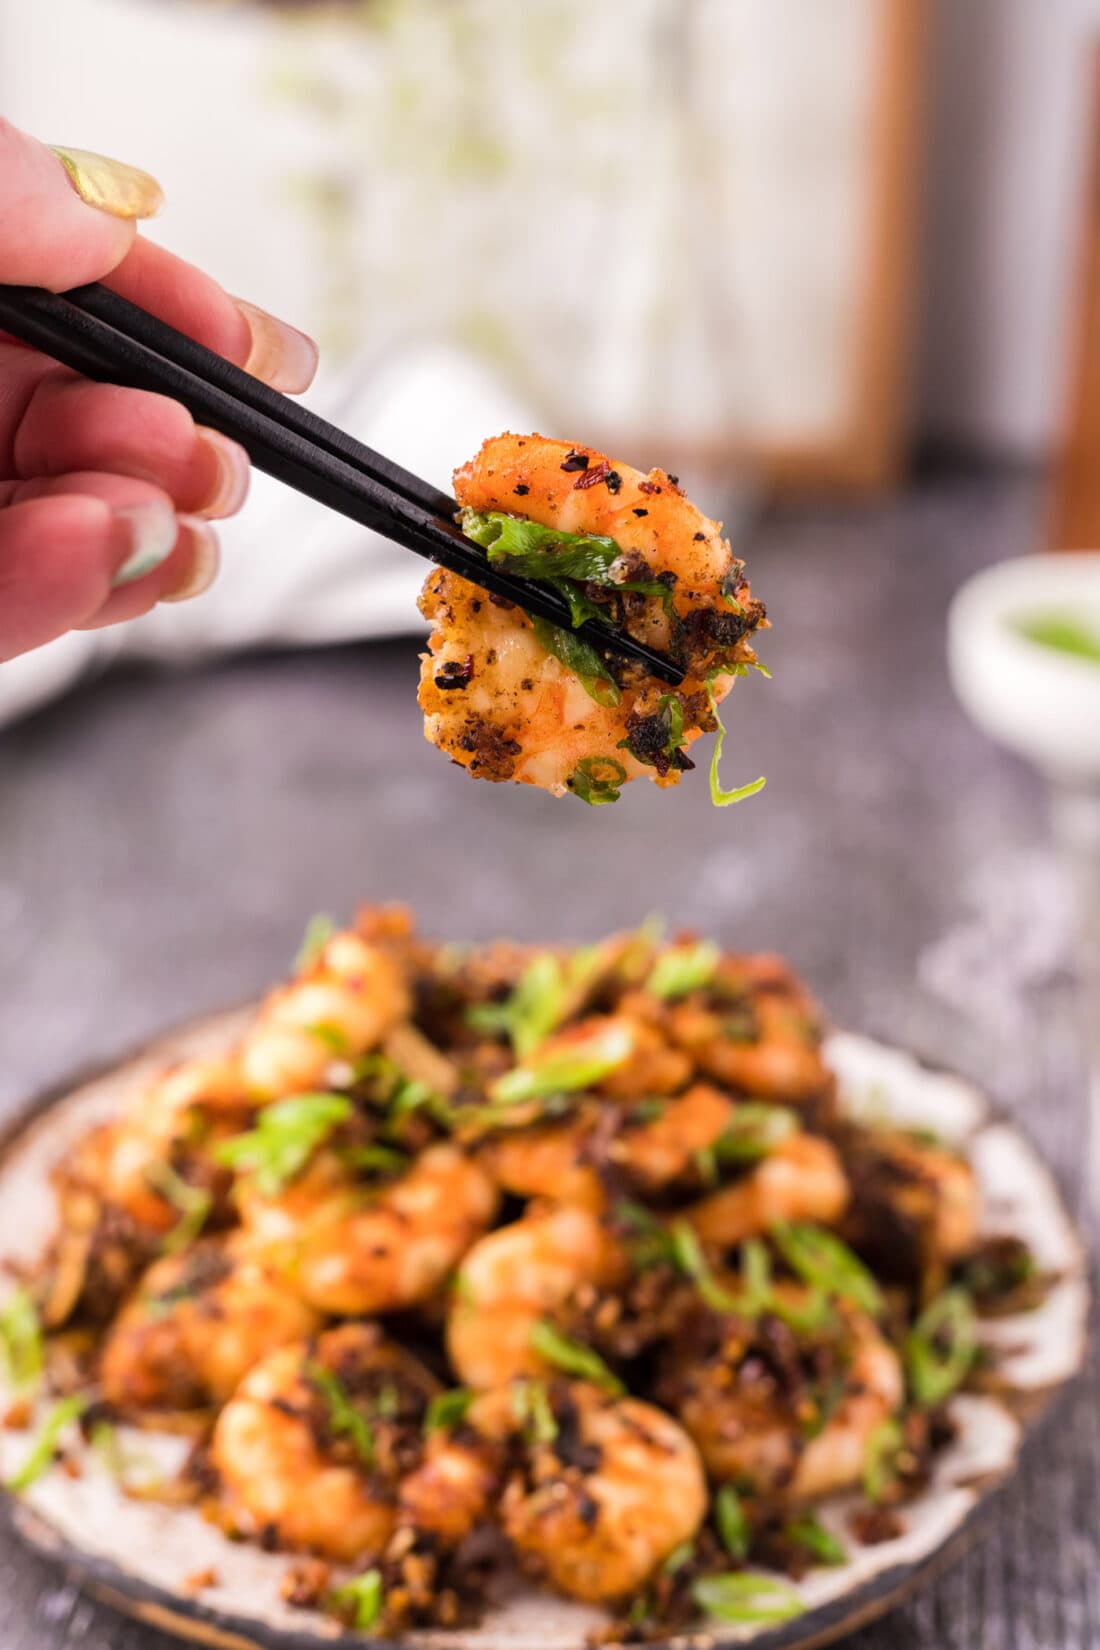 Chopsticks holding a Salt and Pepper Shrimp